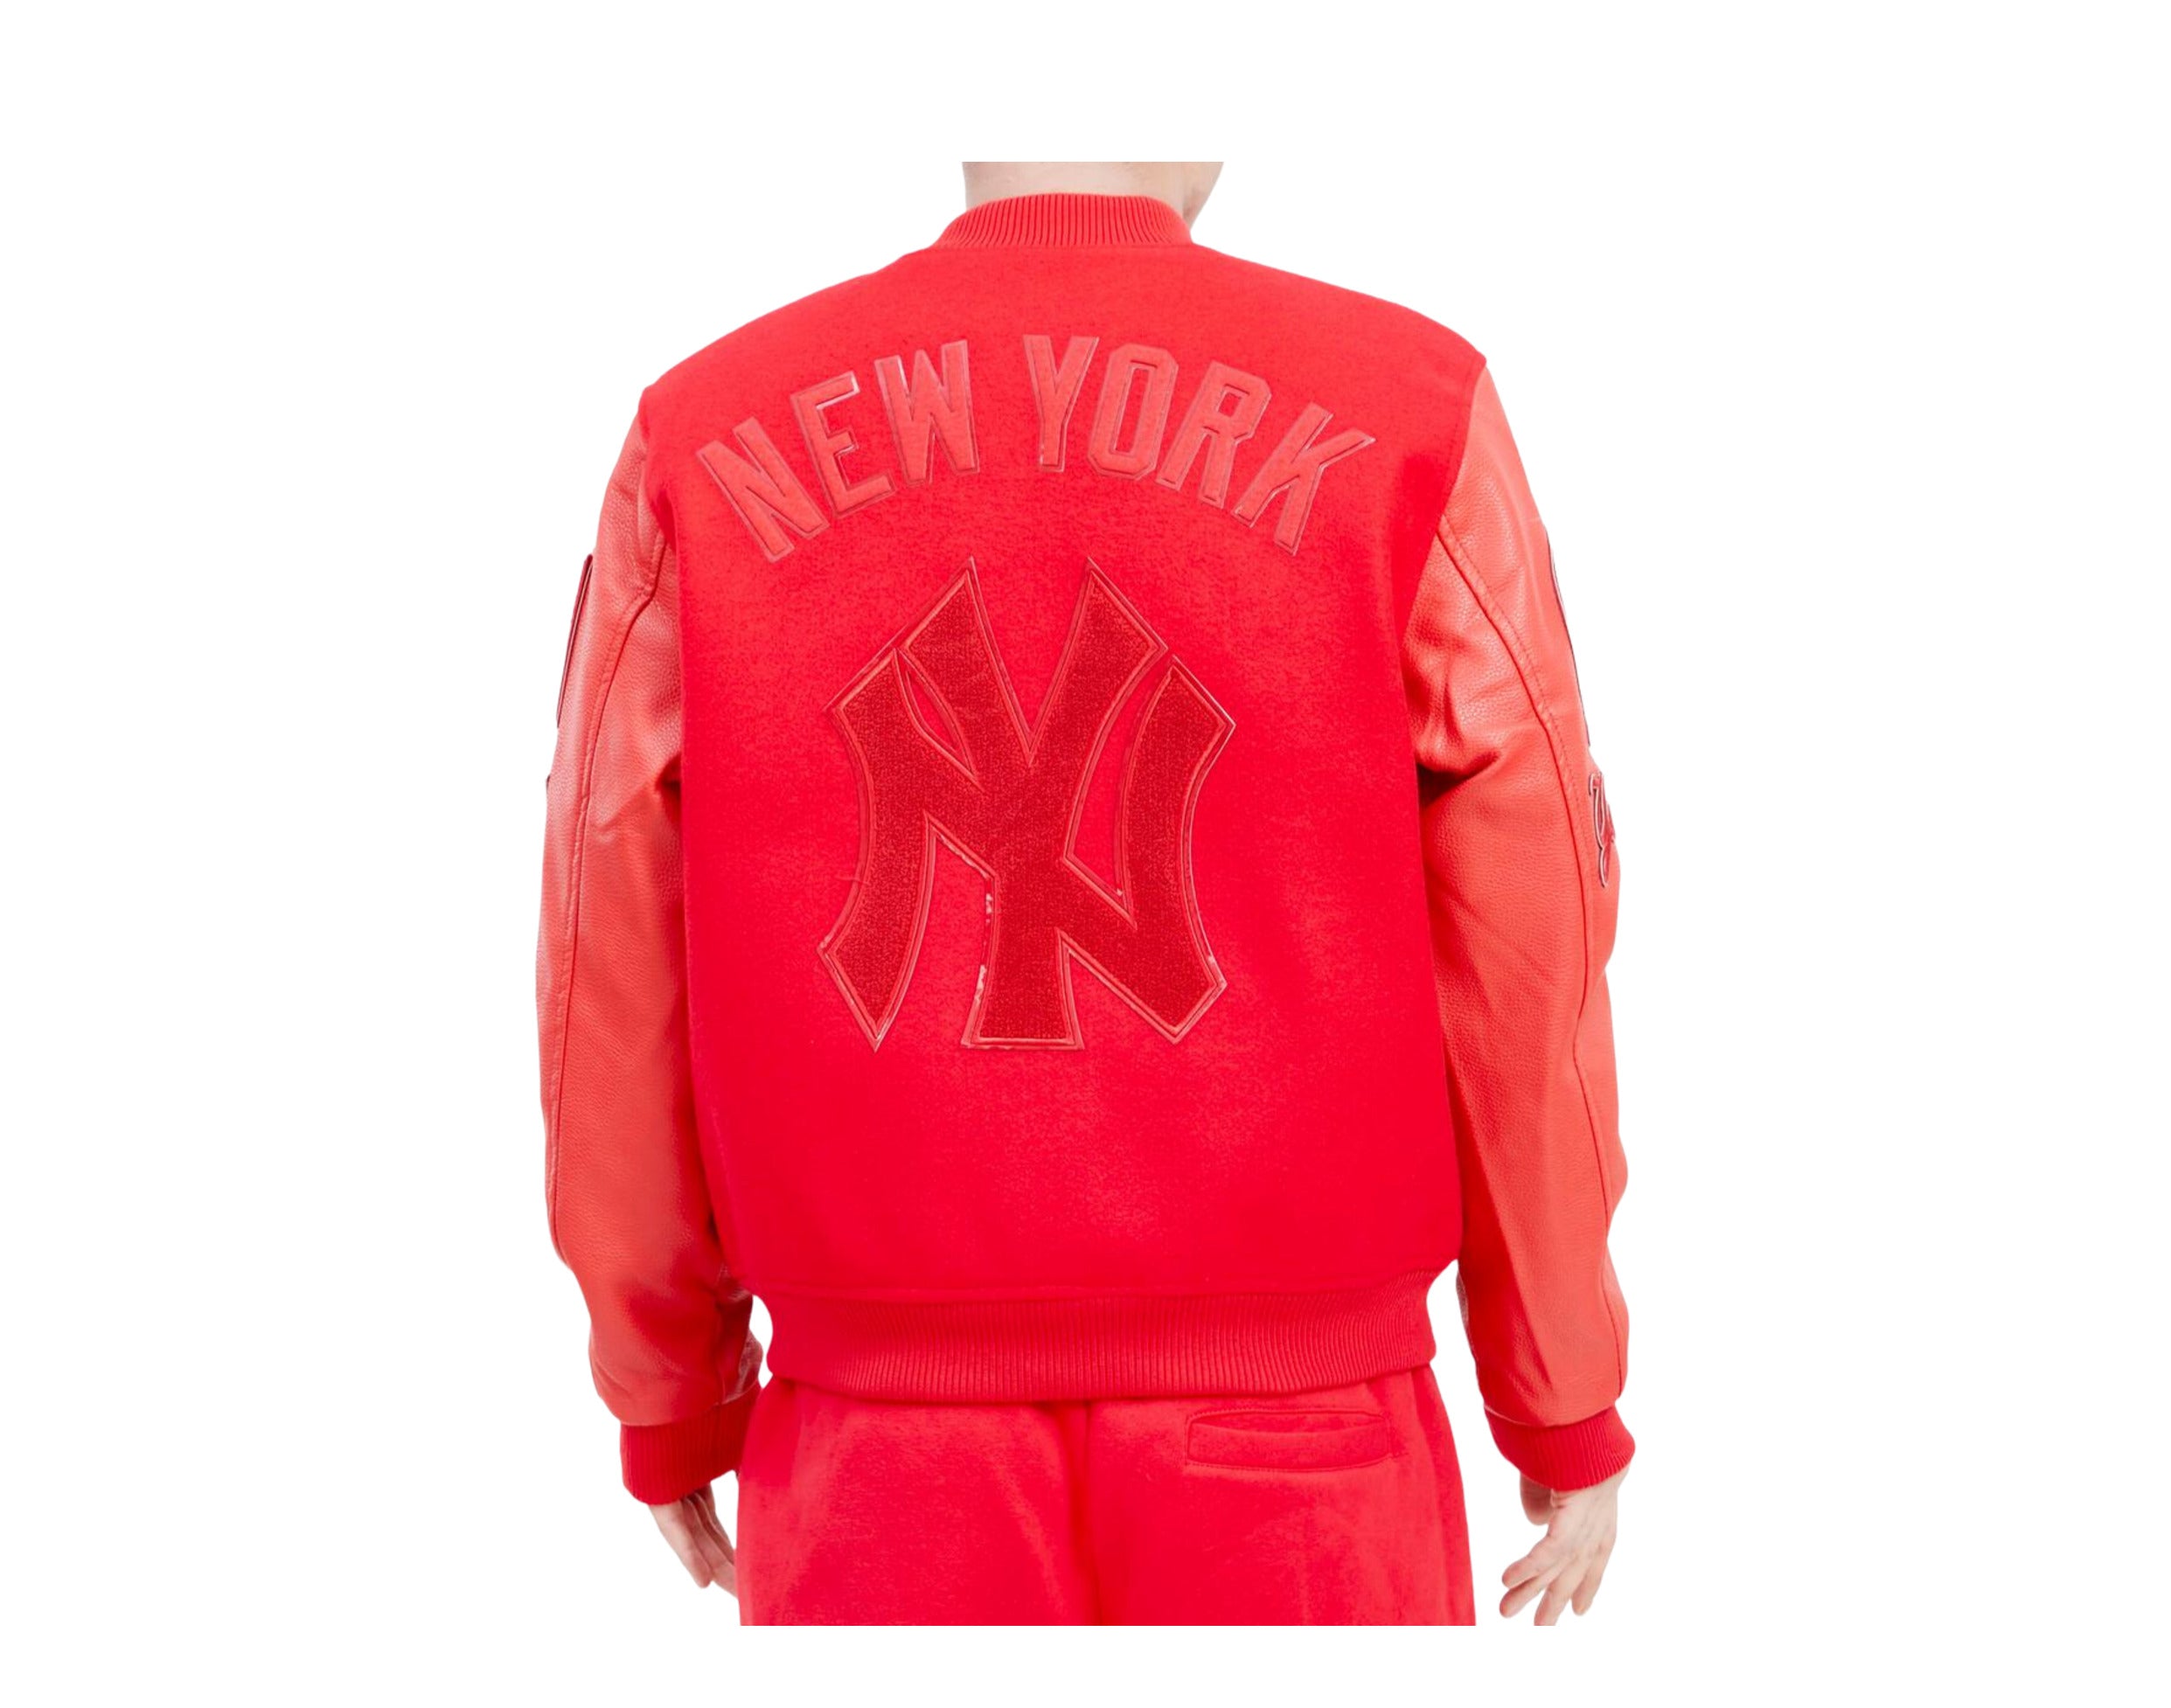 Red Jacket 'New York Yankees' Trim Fit Ringer T-Shirt (Men)